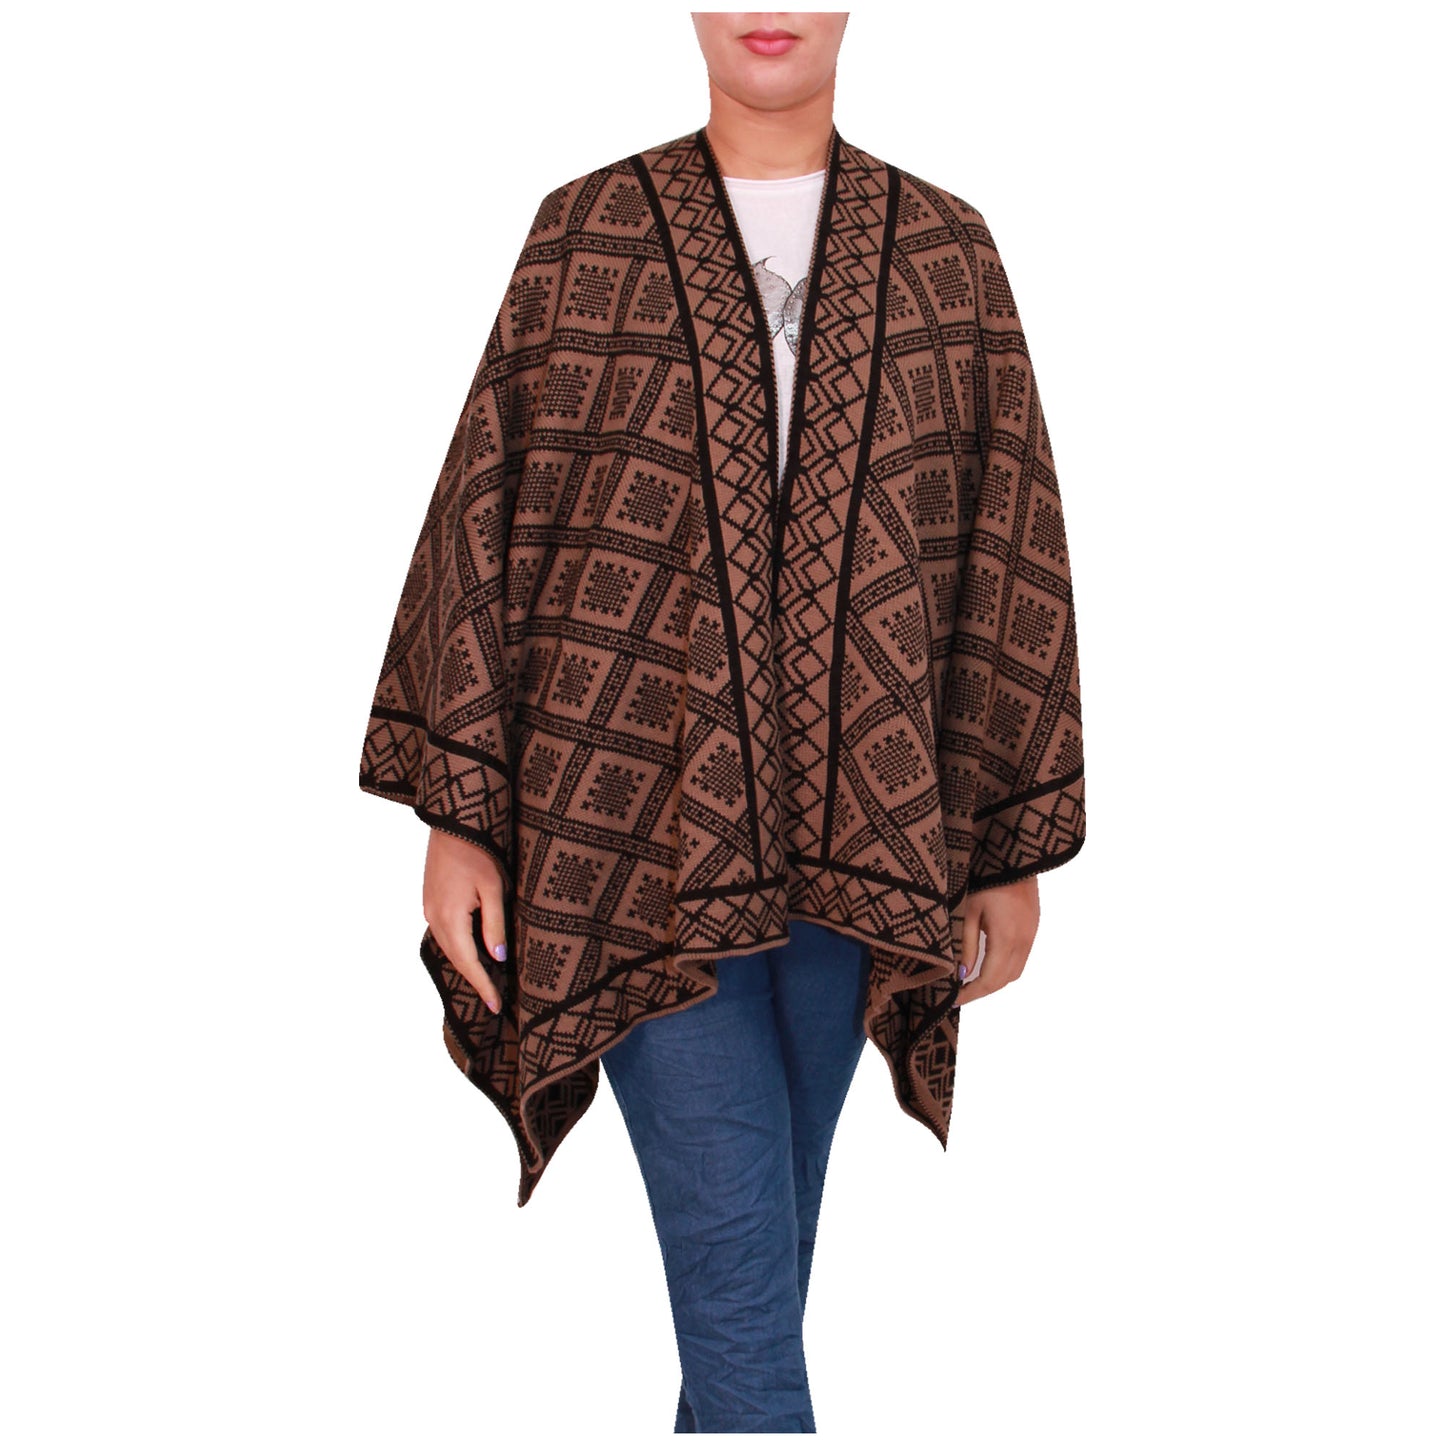 Ladies shawl women knitted Wrap poncho girls Scarfe warm gift Printed tartan Open Front Cardigan Aztec present